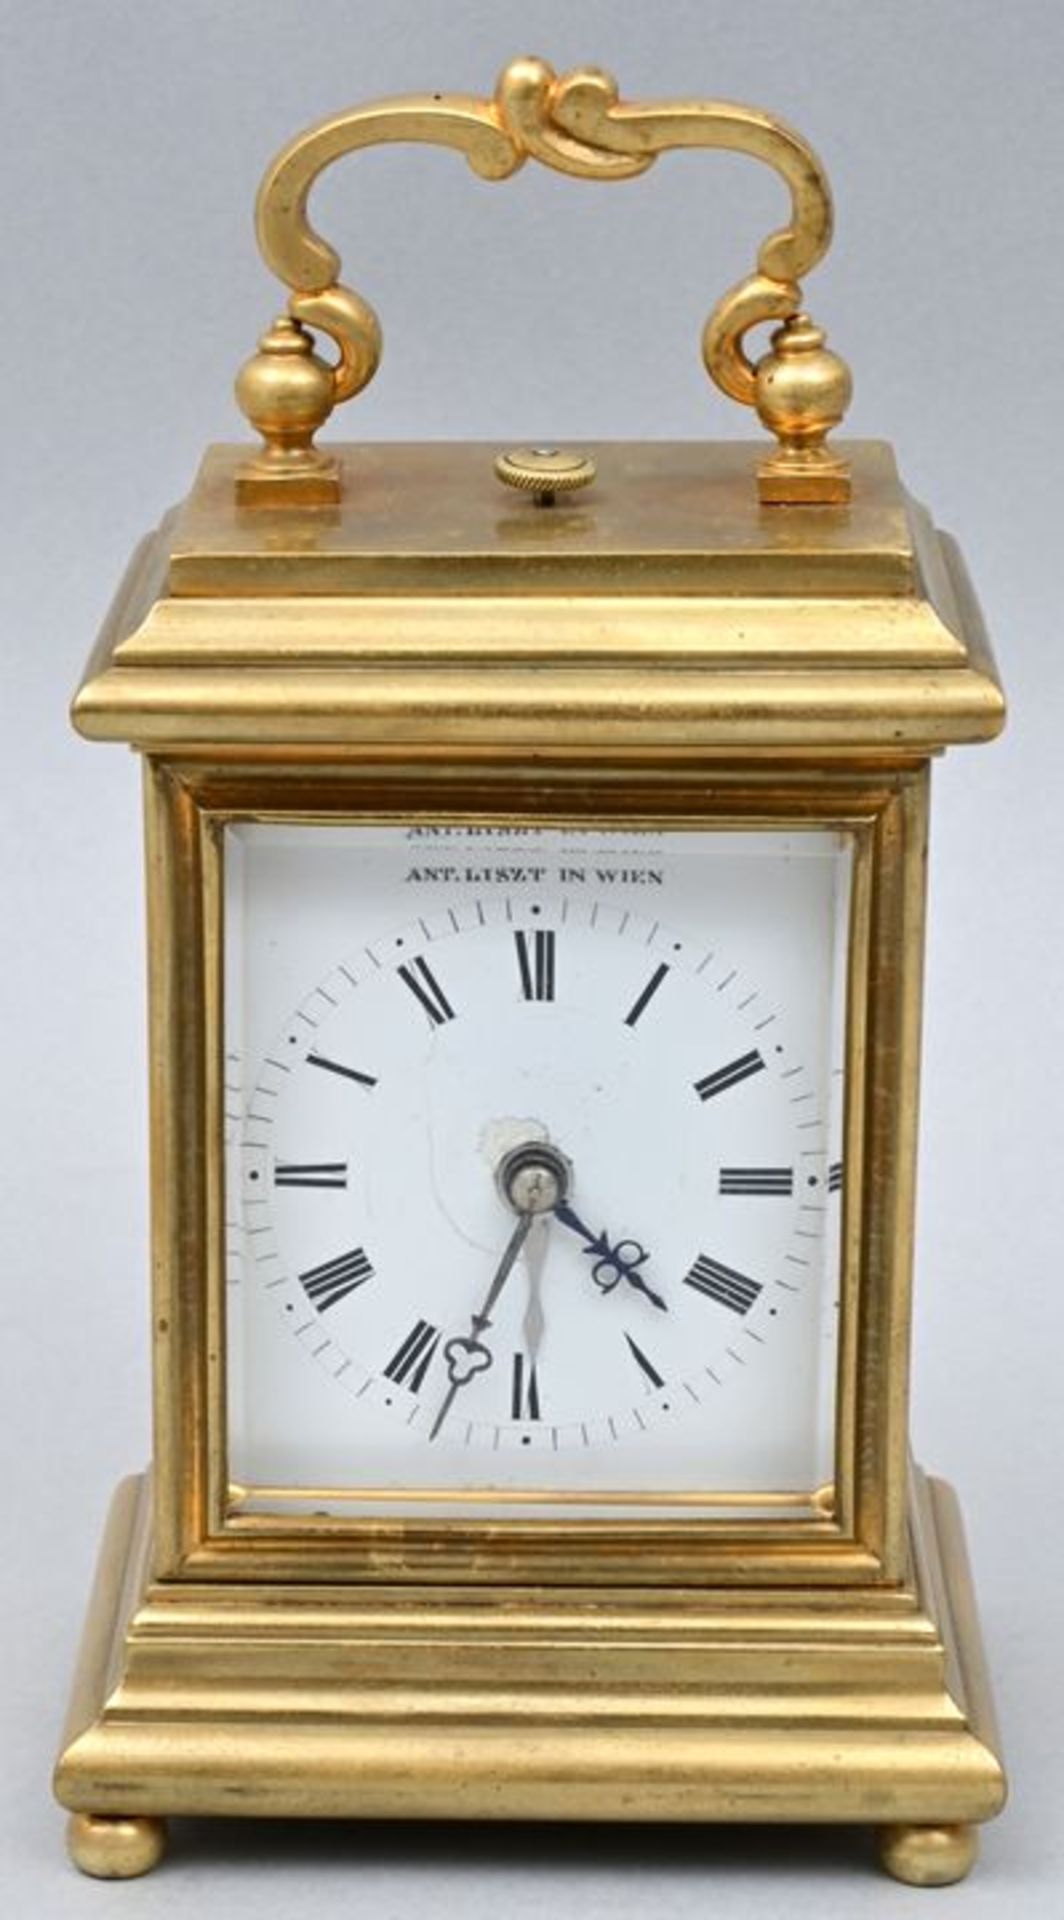 Reiseuhr Anton Liszt Wien / Travel clock